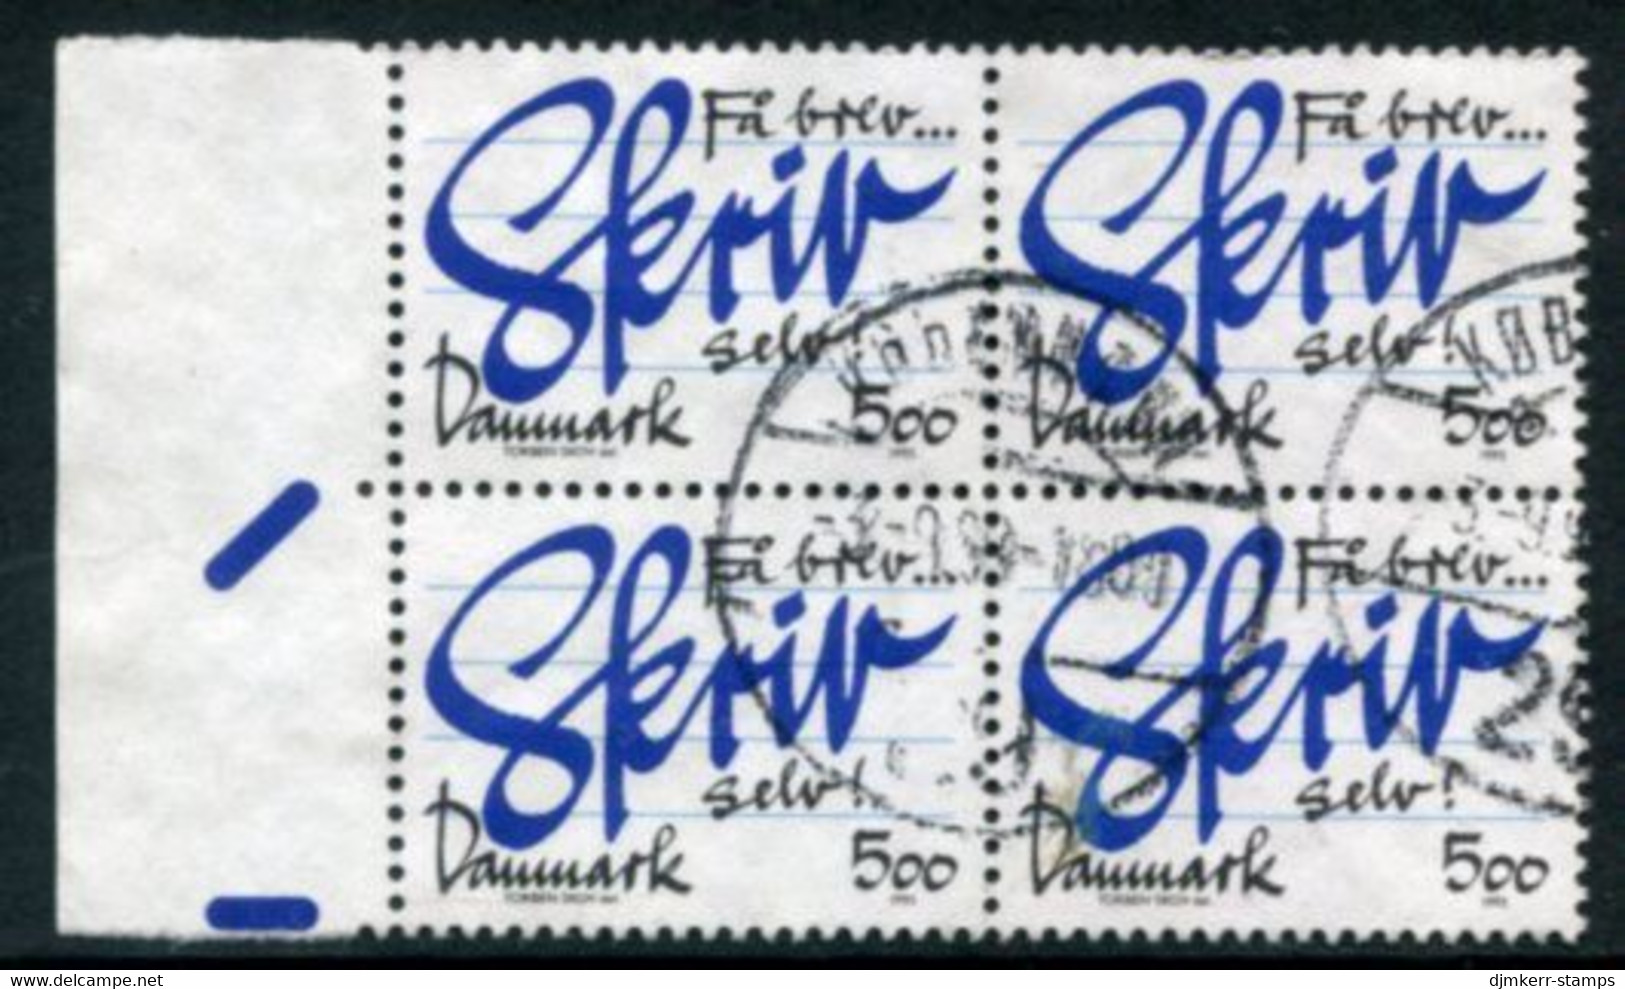 DENMARK 1993 Letter-writing Campaign Block Of 4 Used. Michel 1062 - Gebruikt